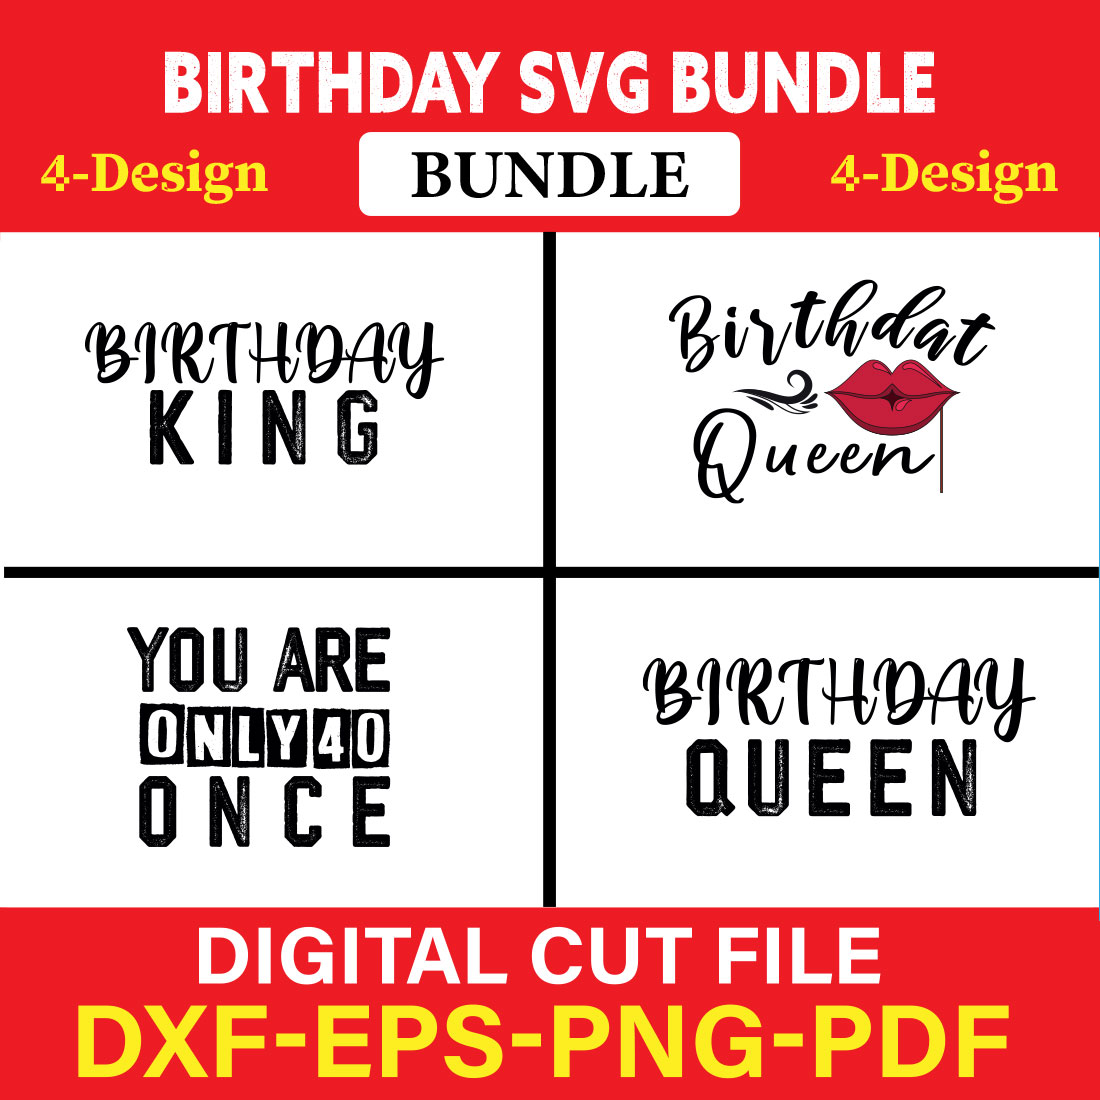 Birthday SVG T-shirt Design Bundle Vol-21 cover image.